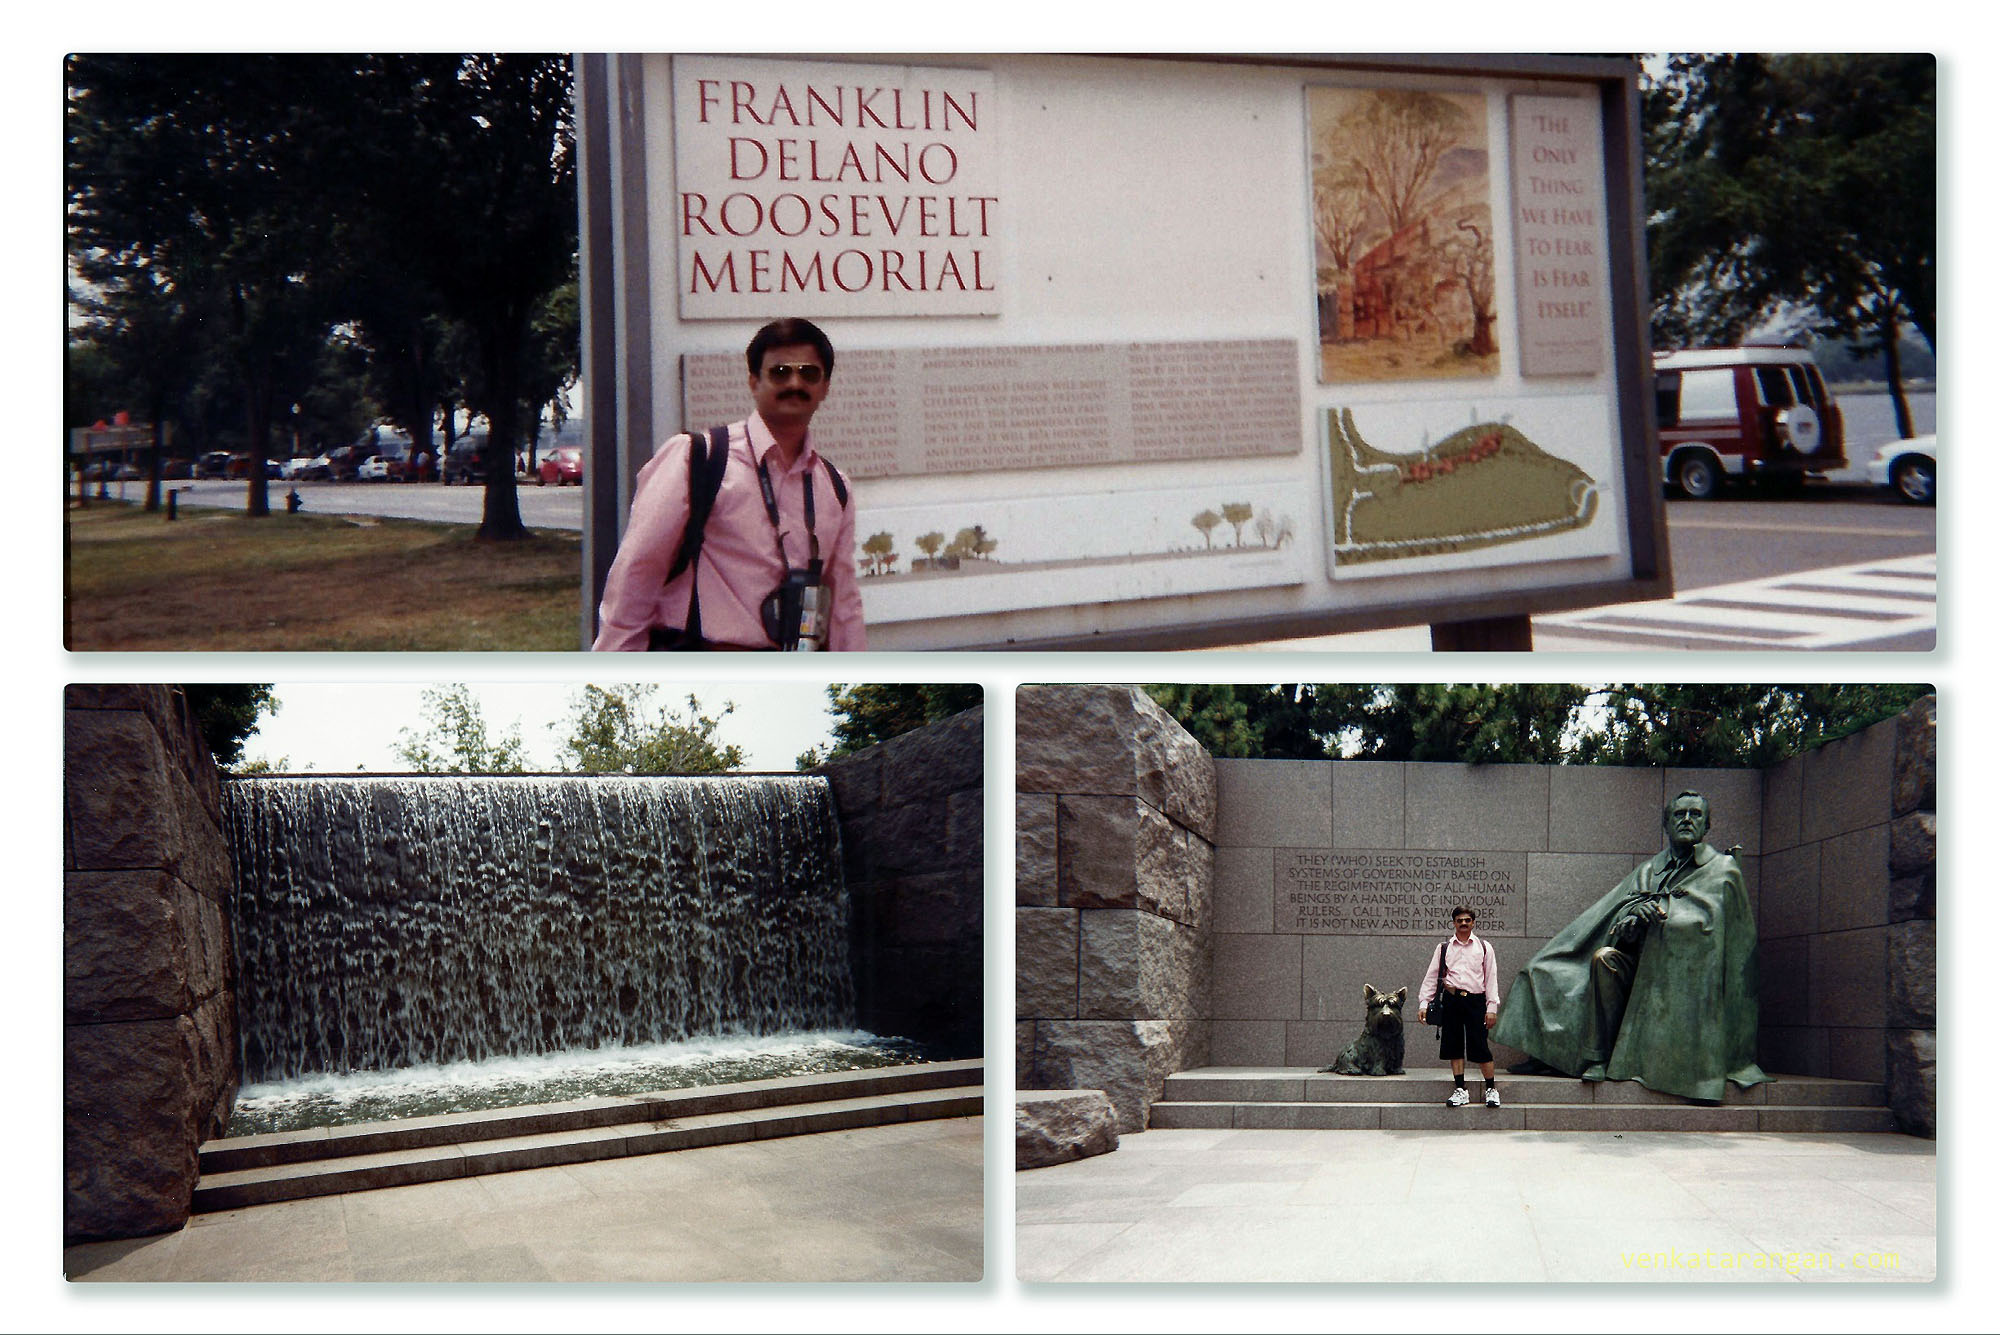 Franklin Delano Roosevelt memorial, Washington, D.C.